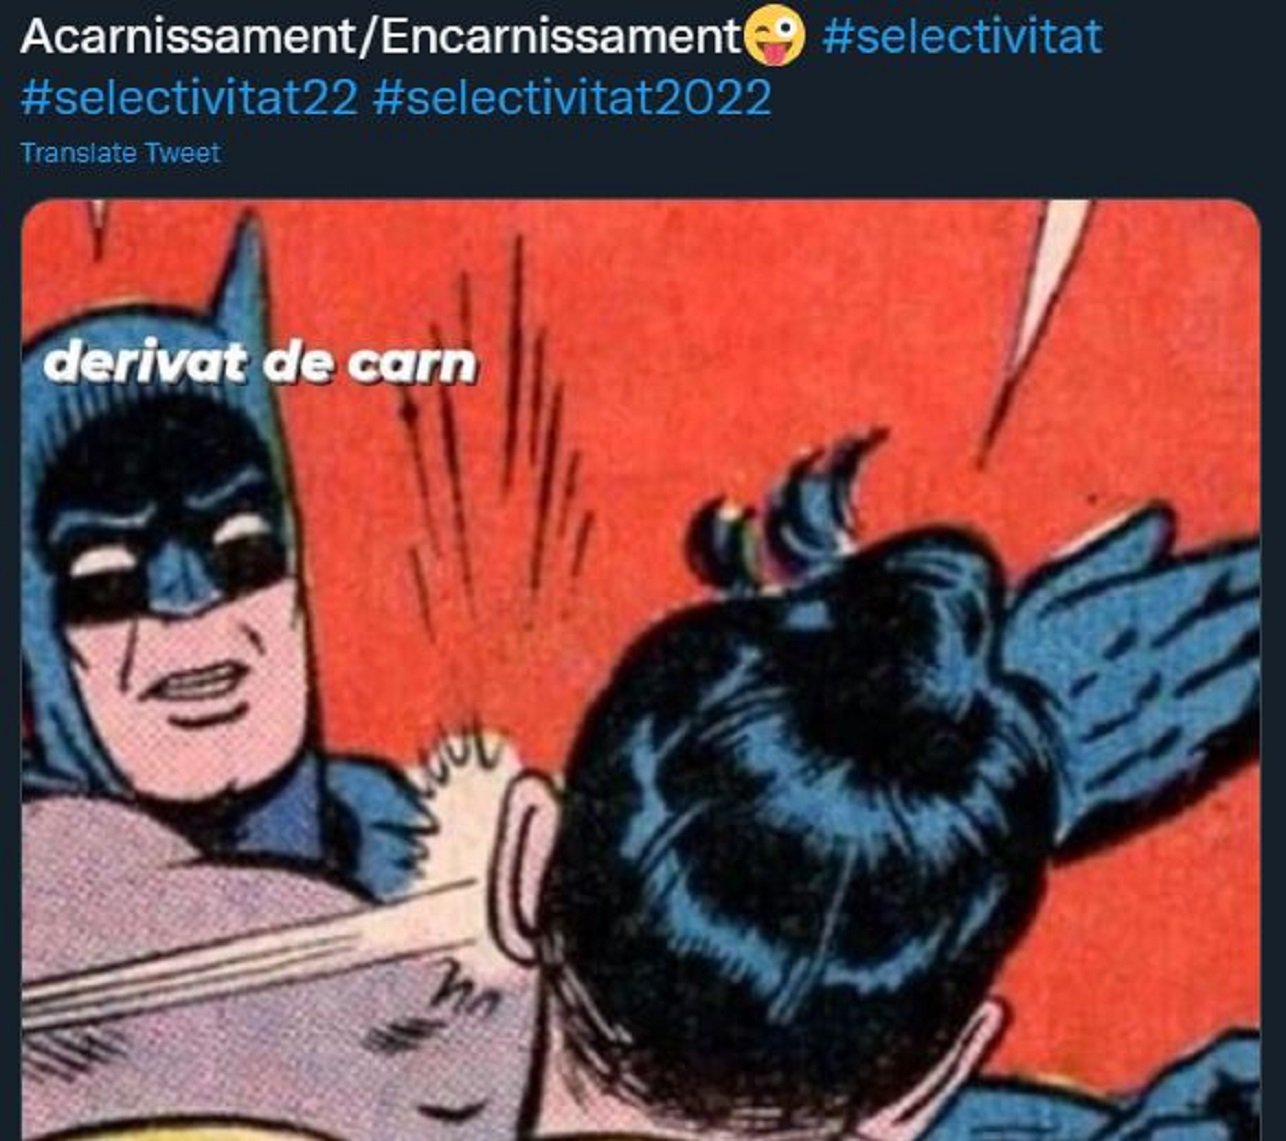 ¿"Encarnissament o acarnissament"? Memes del derivado de carne en el examen de catalán de Selectividad 2022